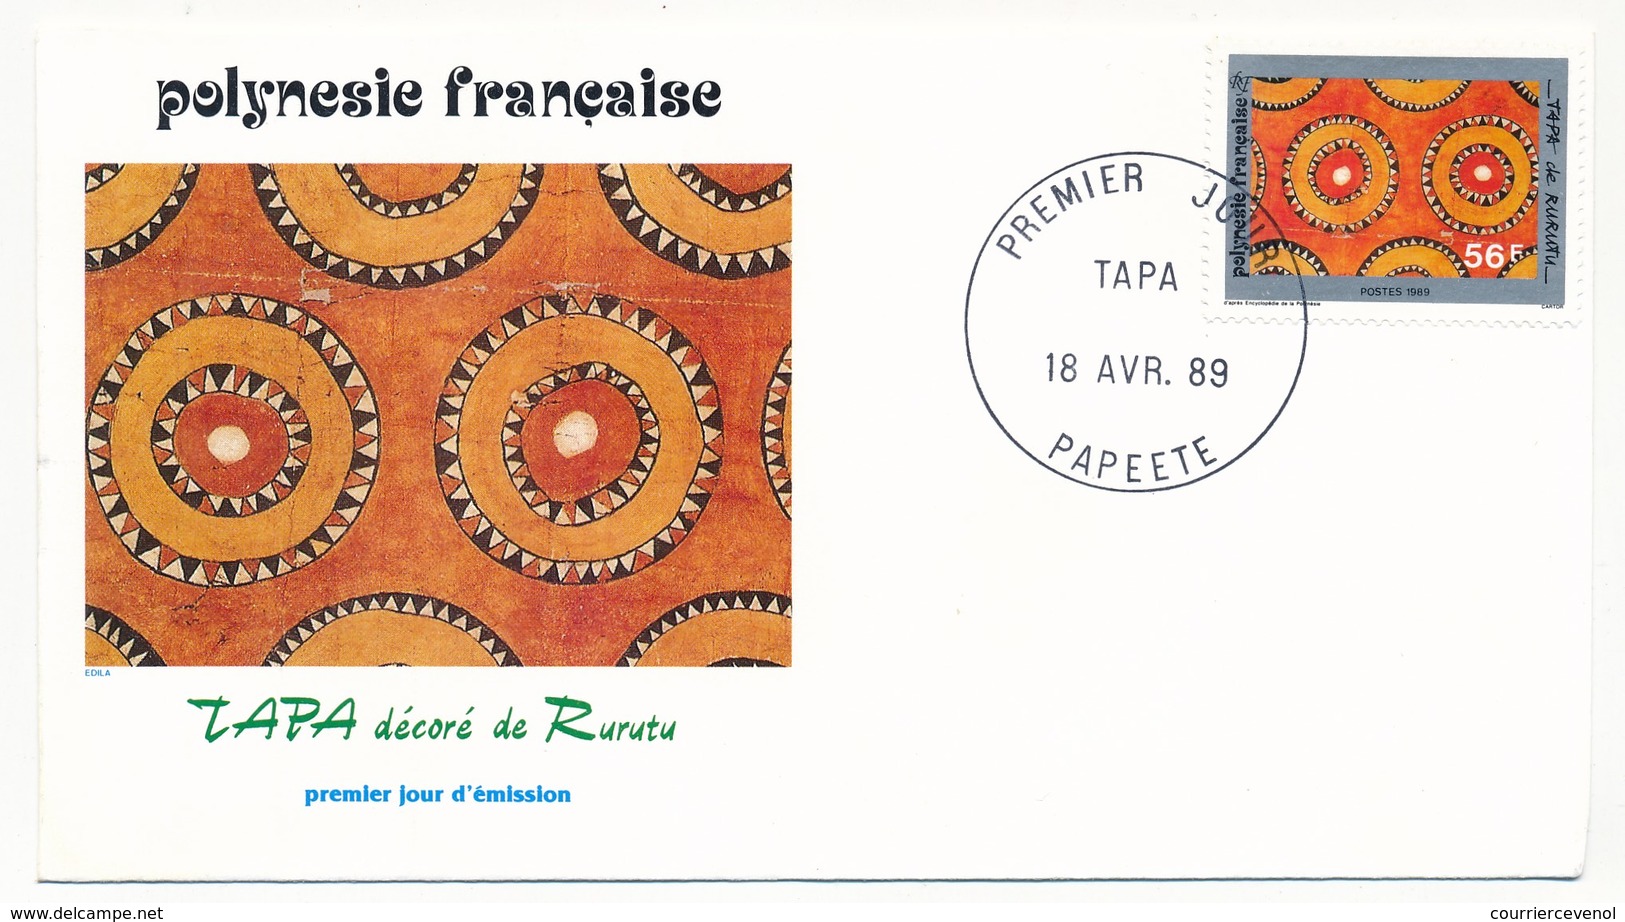 POLYNESIE FRANCAISE - 3 FDC - Tapa - 18 Avril 1989 - Papeete - FDC